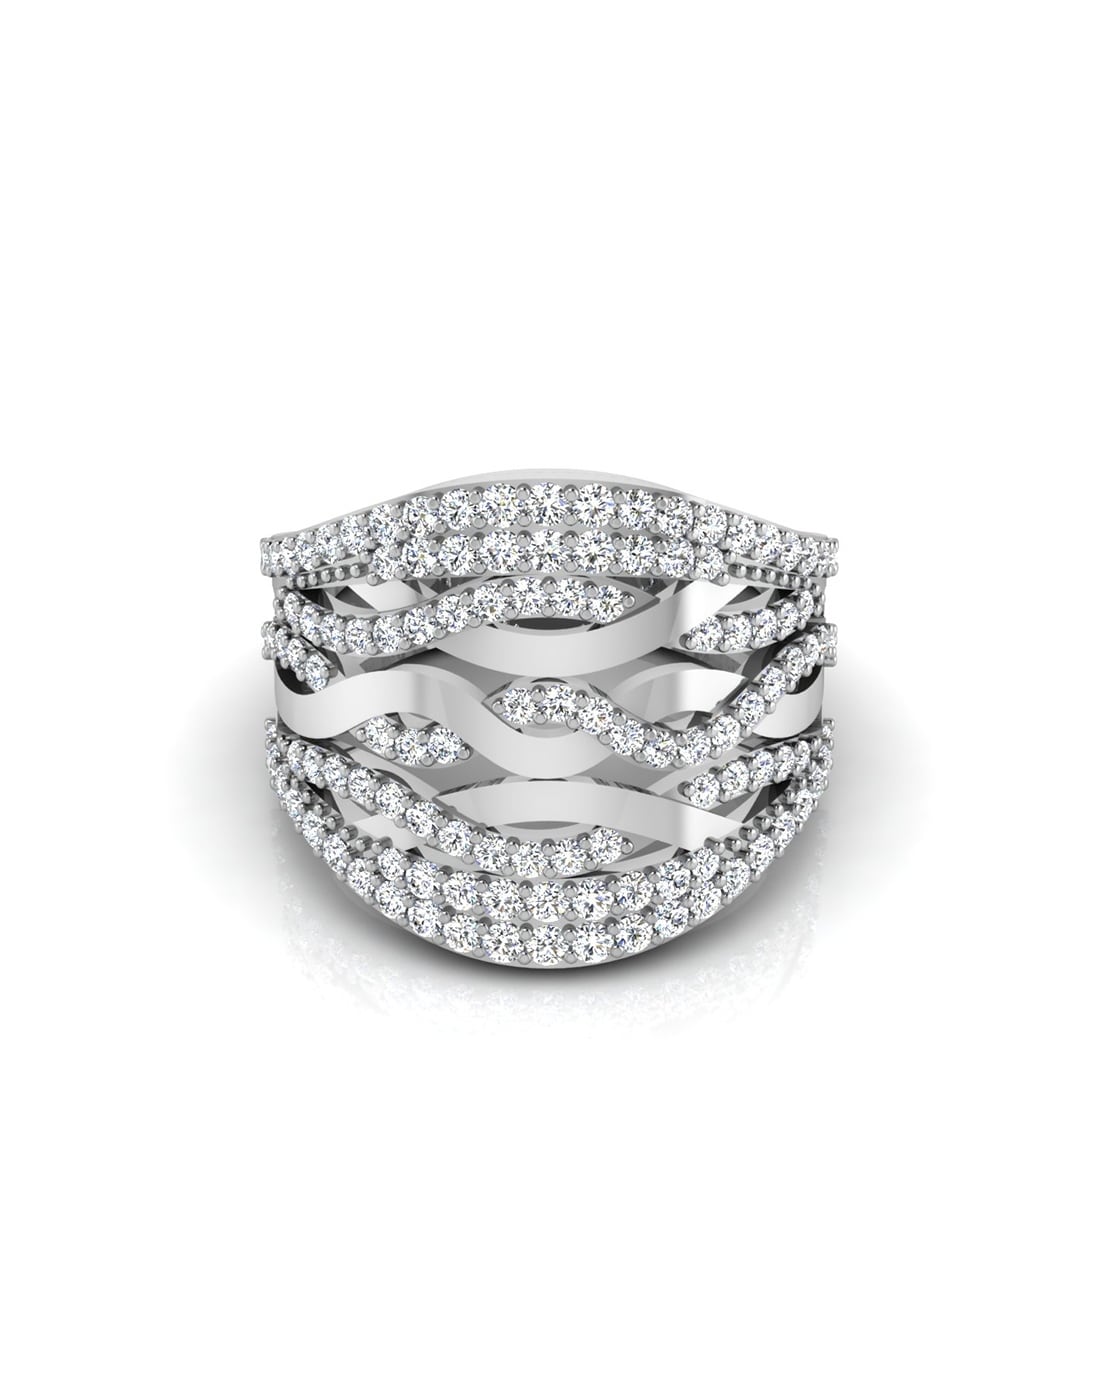 Matte Classic Wedding Ring in 14k White Gold (5mm)